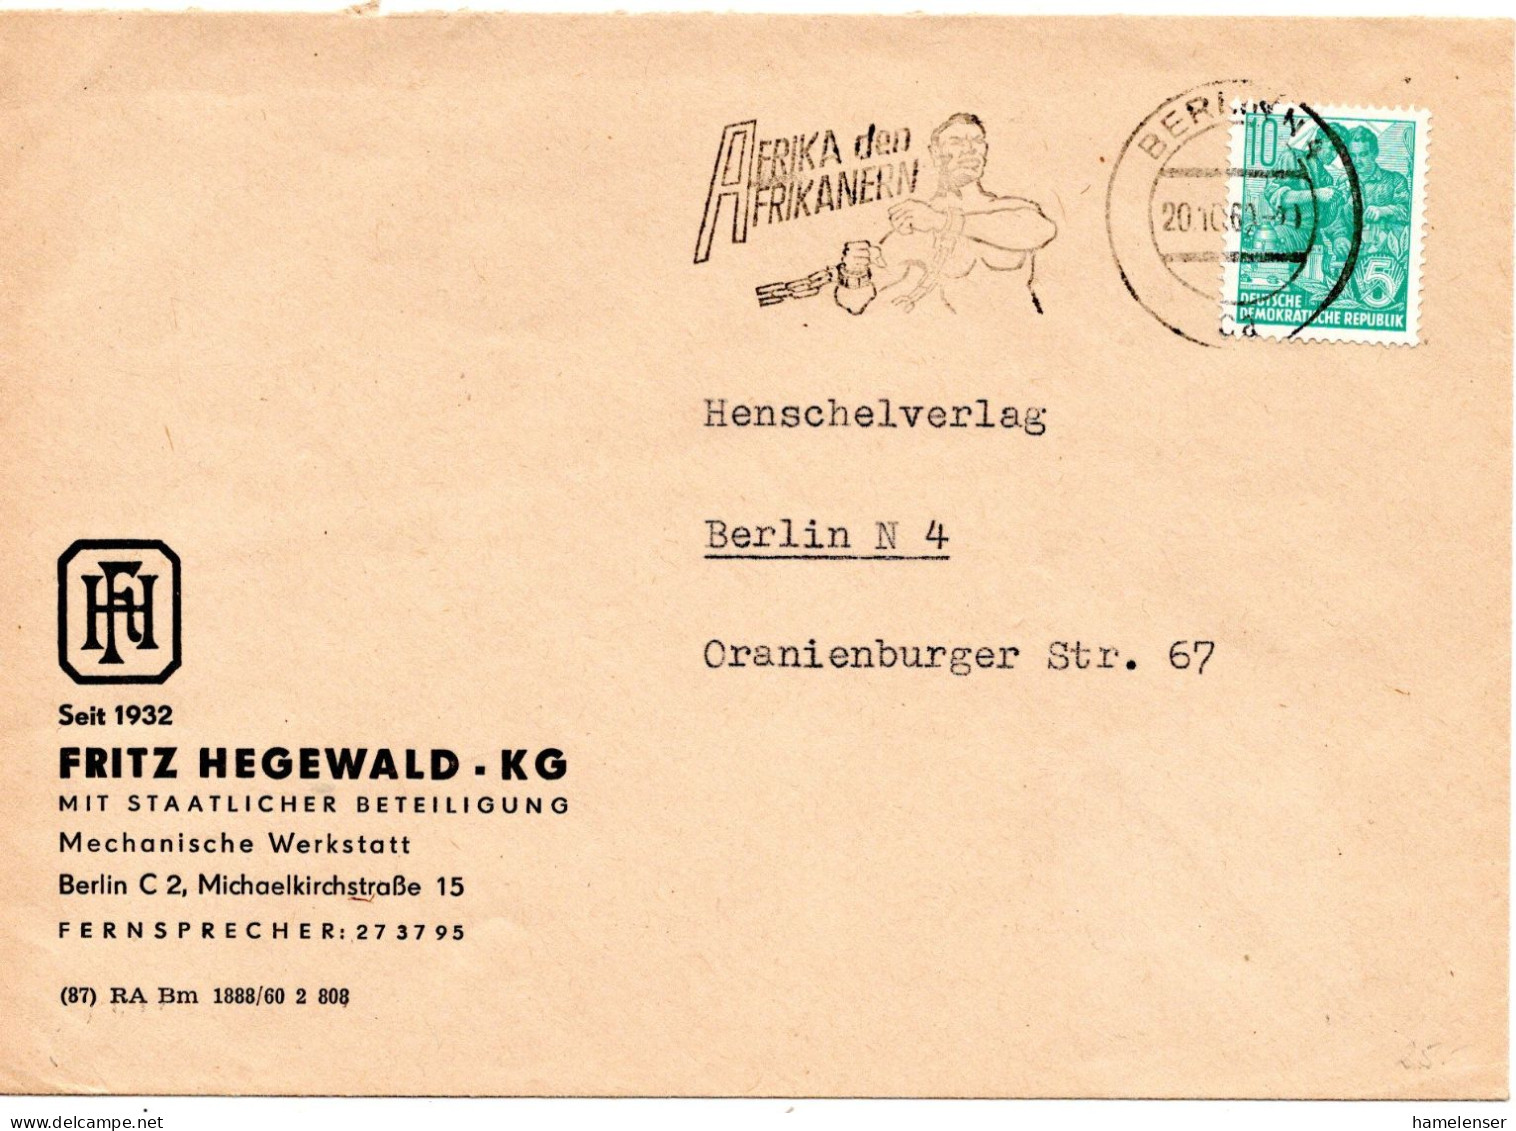 63044 - DDR - 1960 - 10Pfg Fuenfjahrplan EF A OrtsBf BERLIN - AFRIKA DEN AFRIKANERN - Covers & Documents